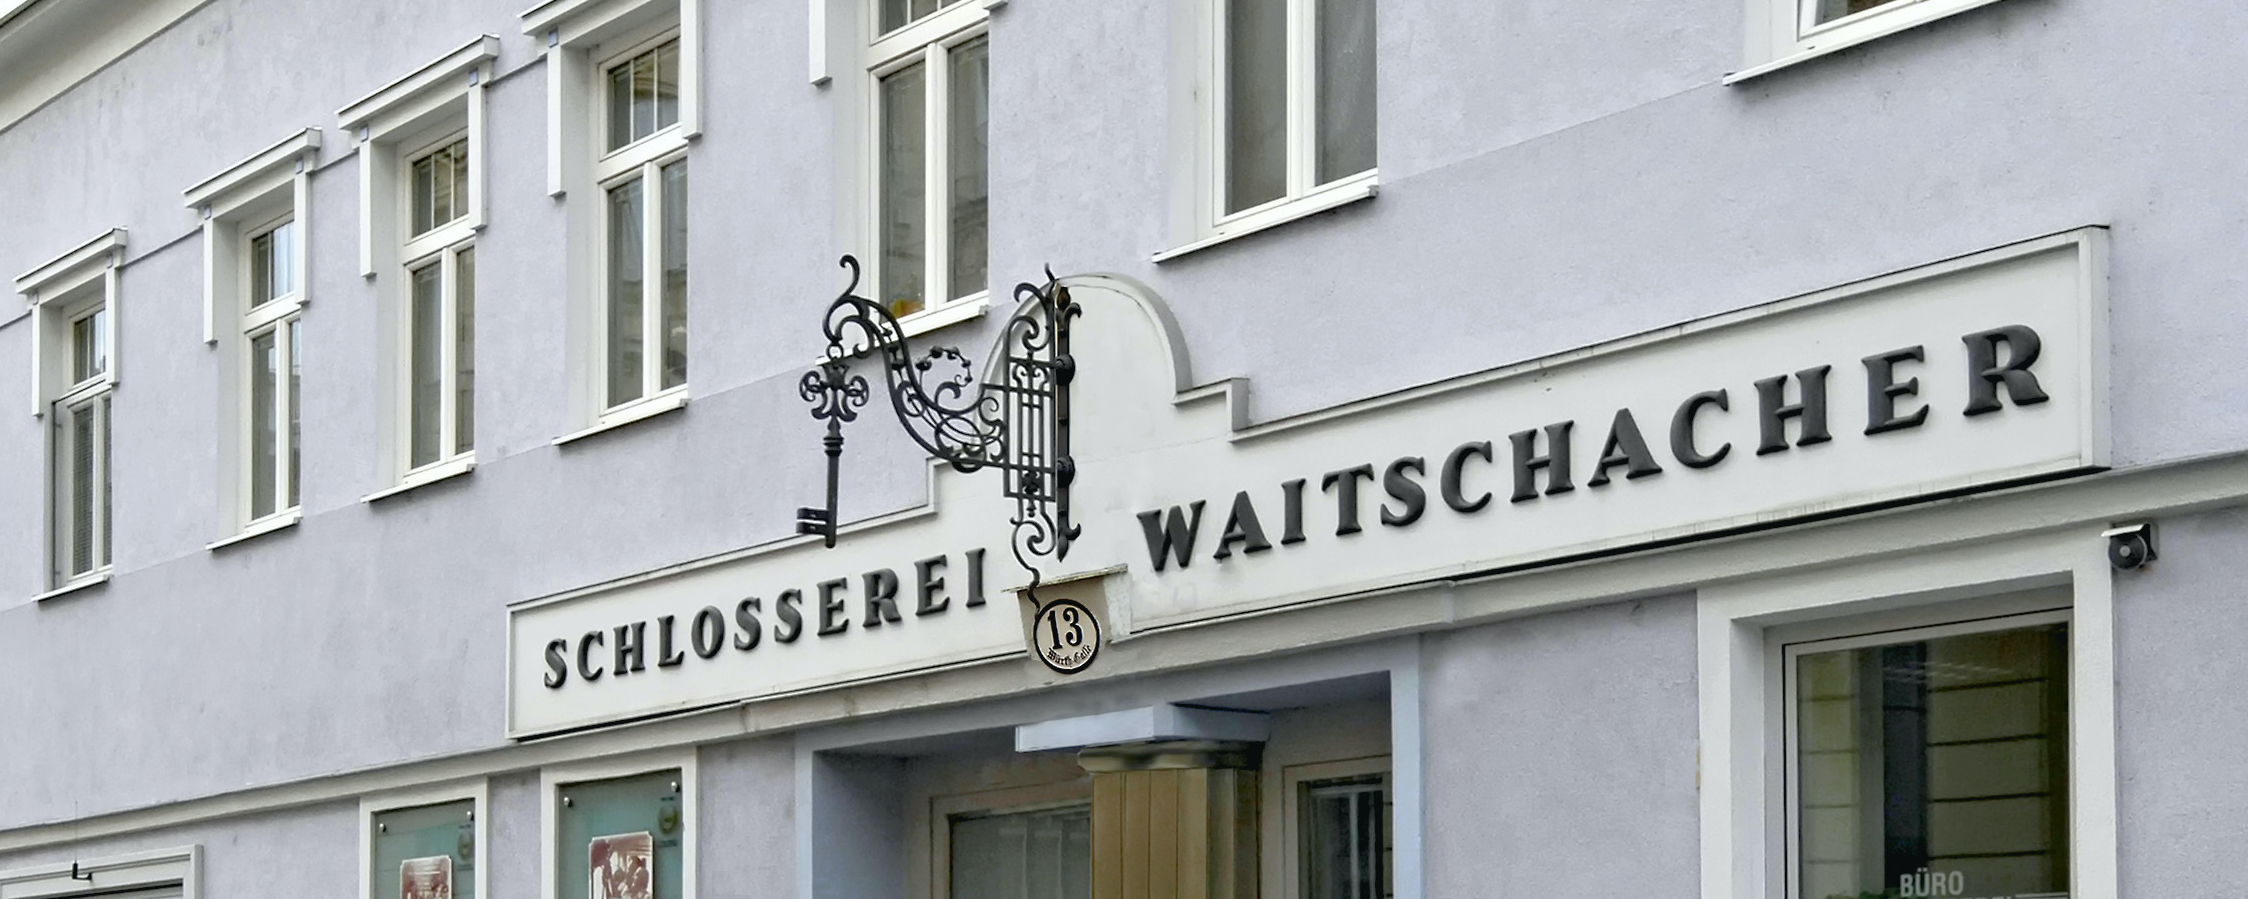 Schlosserei Waitschacher Foto